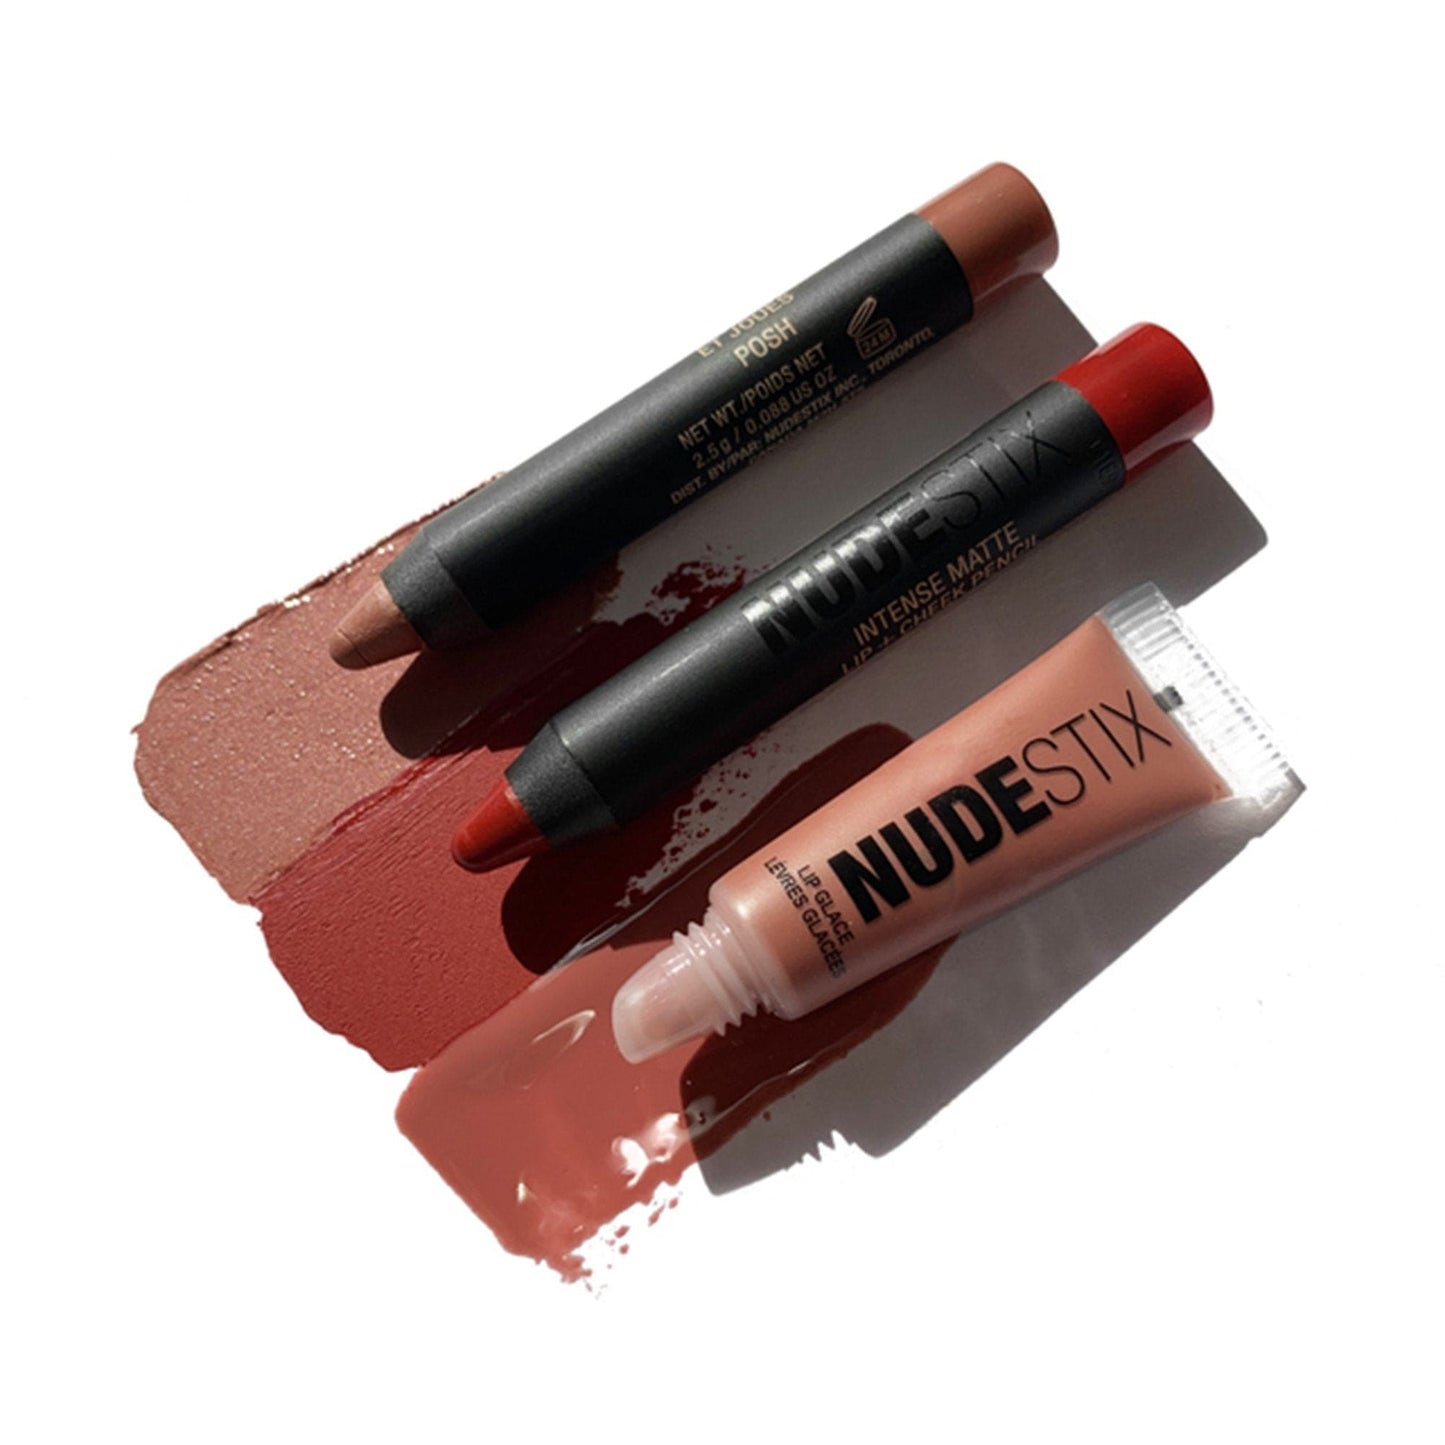 Nude + Red Hot Lips Mini Kit- Sale